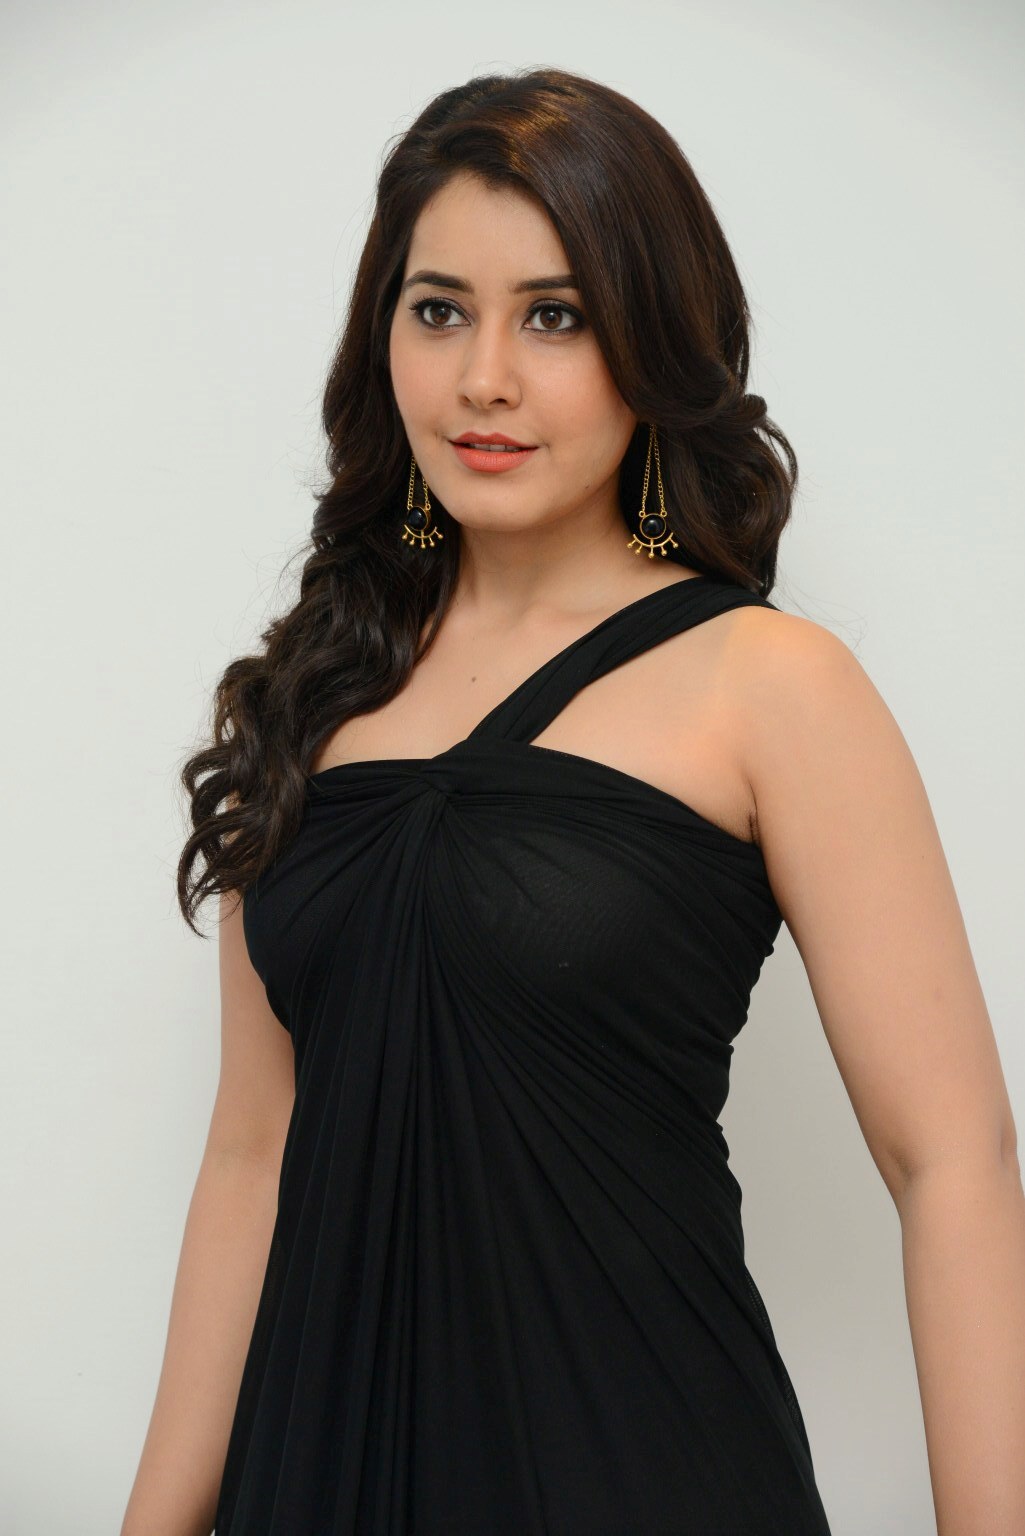 cute hot tamil actress rashi khanna new latest images